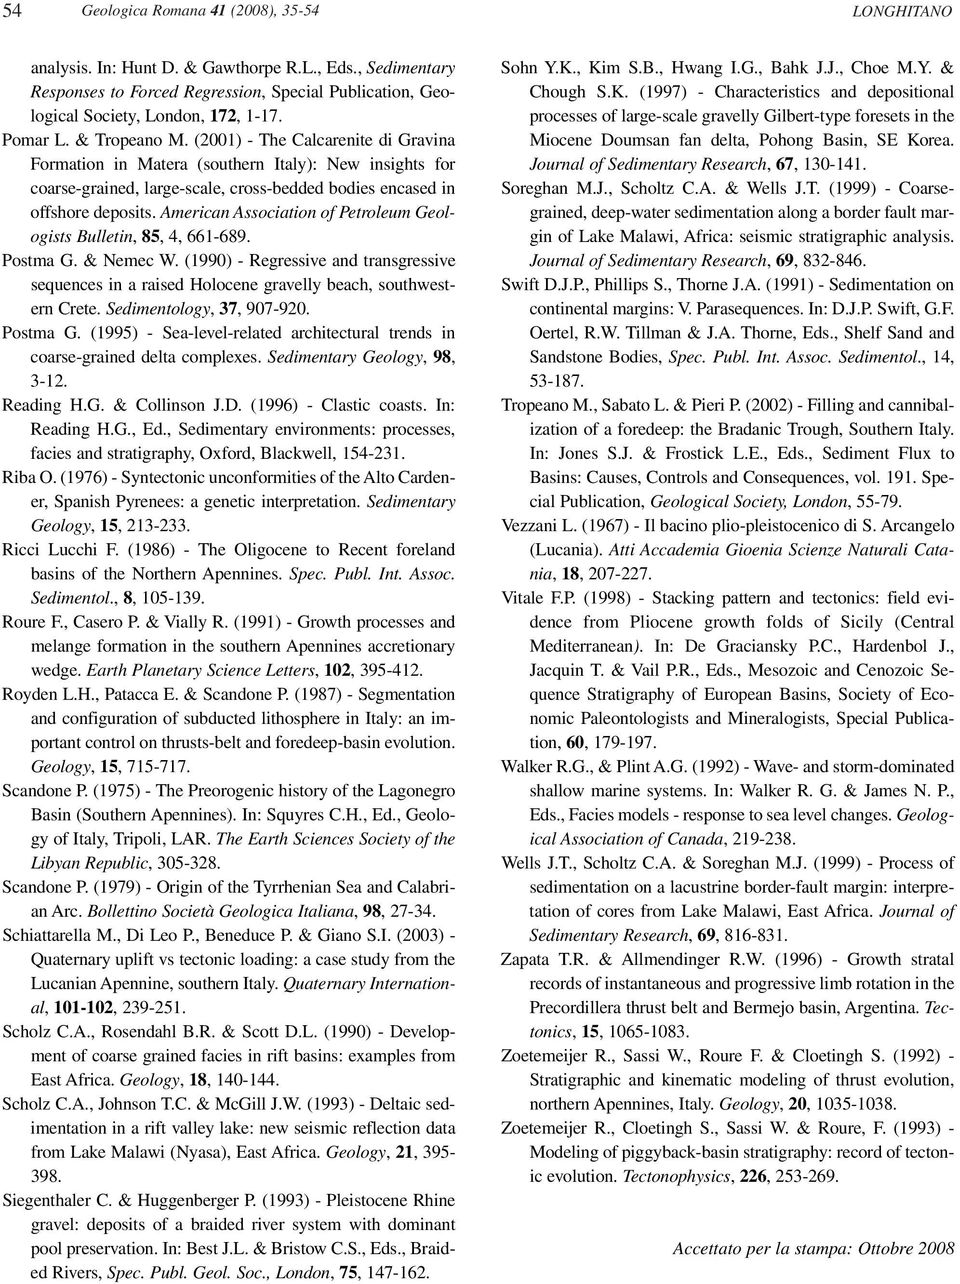 American Association of Petroleum Geologists Bulletin, 85, 4, 661-689. Postma G. & Nemec W. (1990) - Regressive and transgressive sequences in a raised Holocene gravelly beach, southwestern Crete.